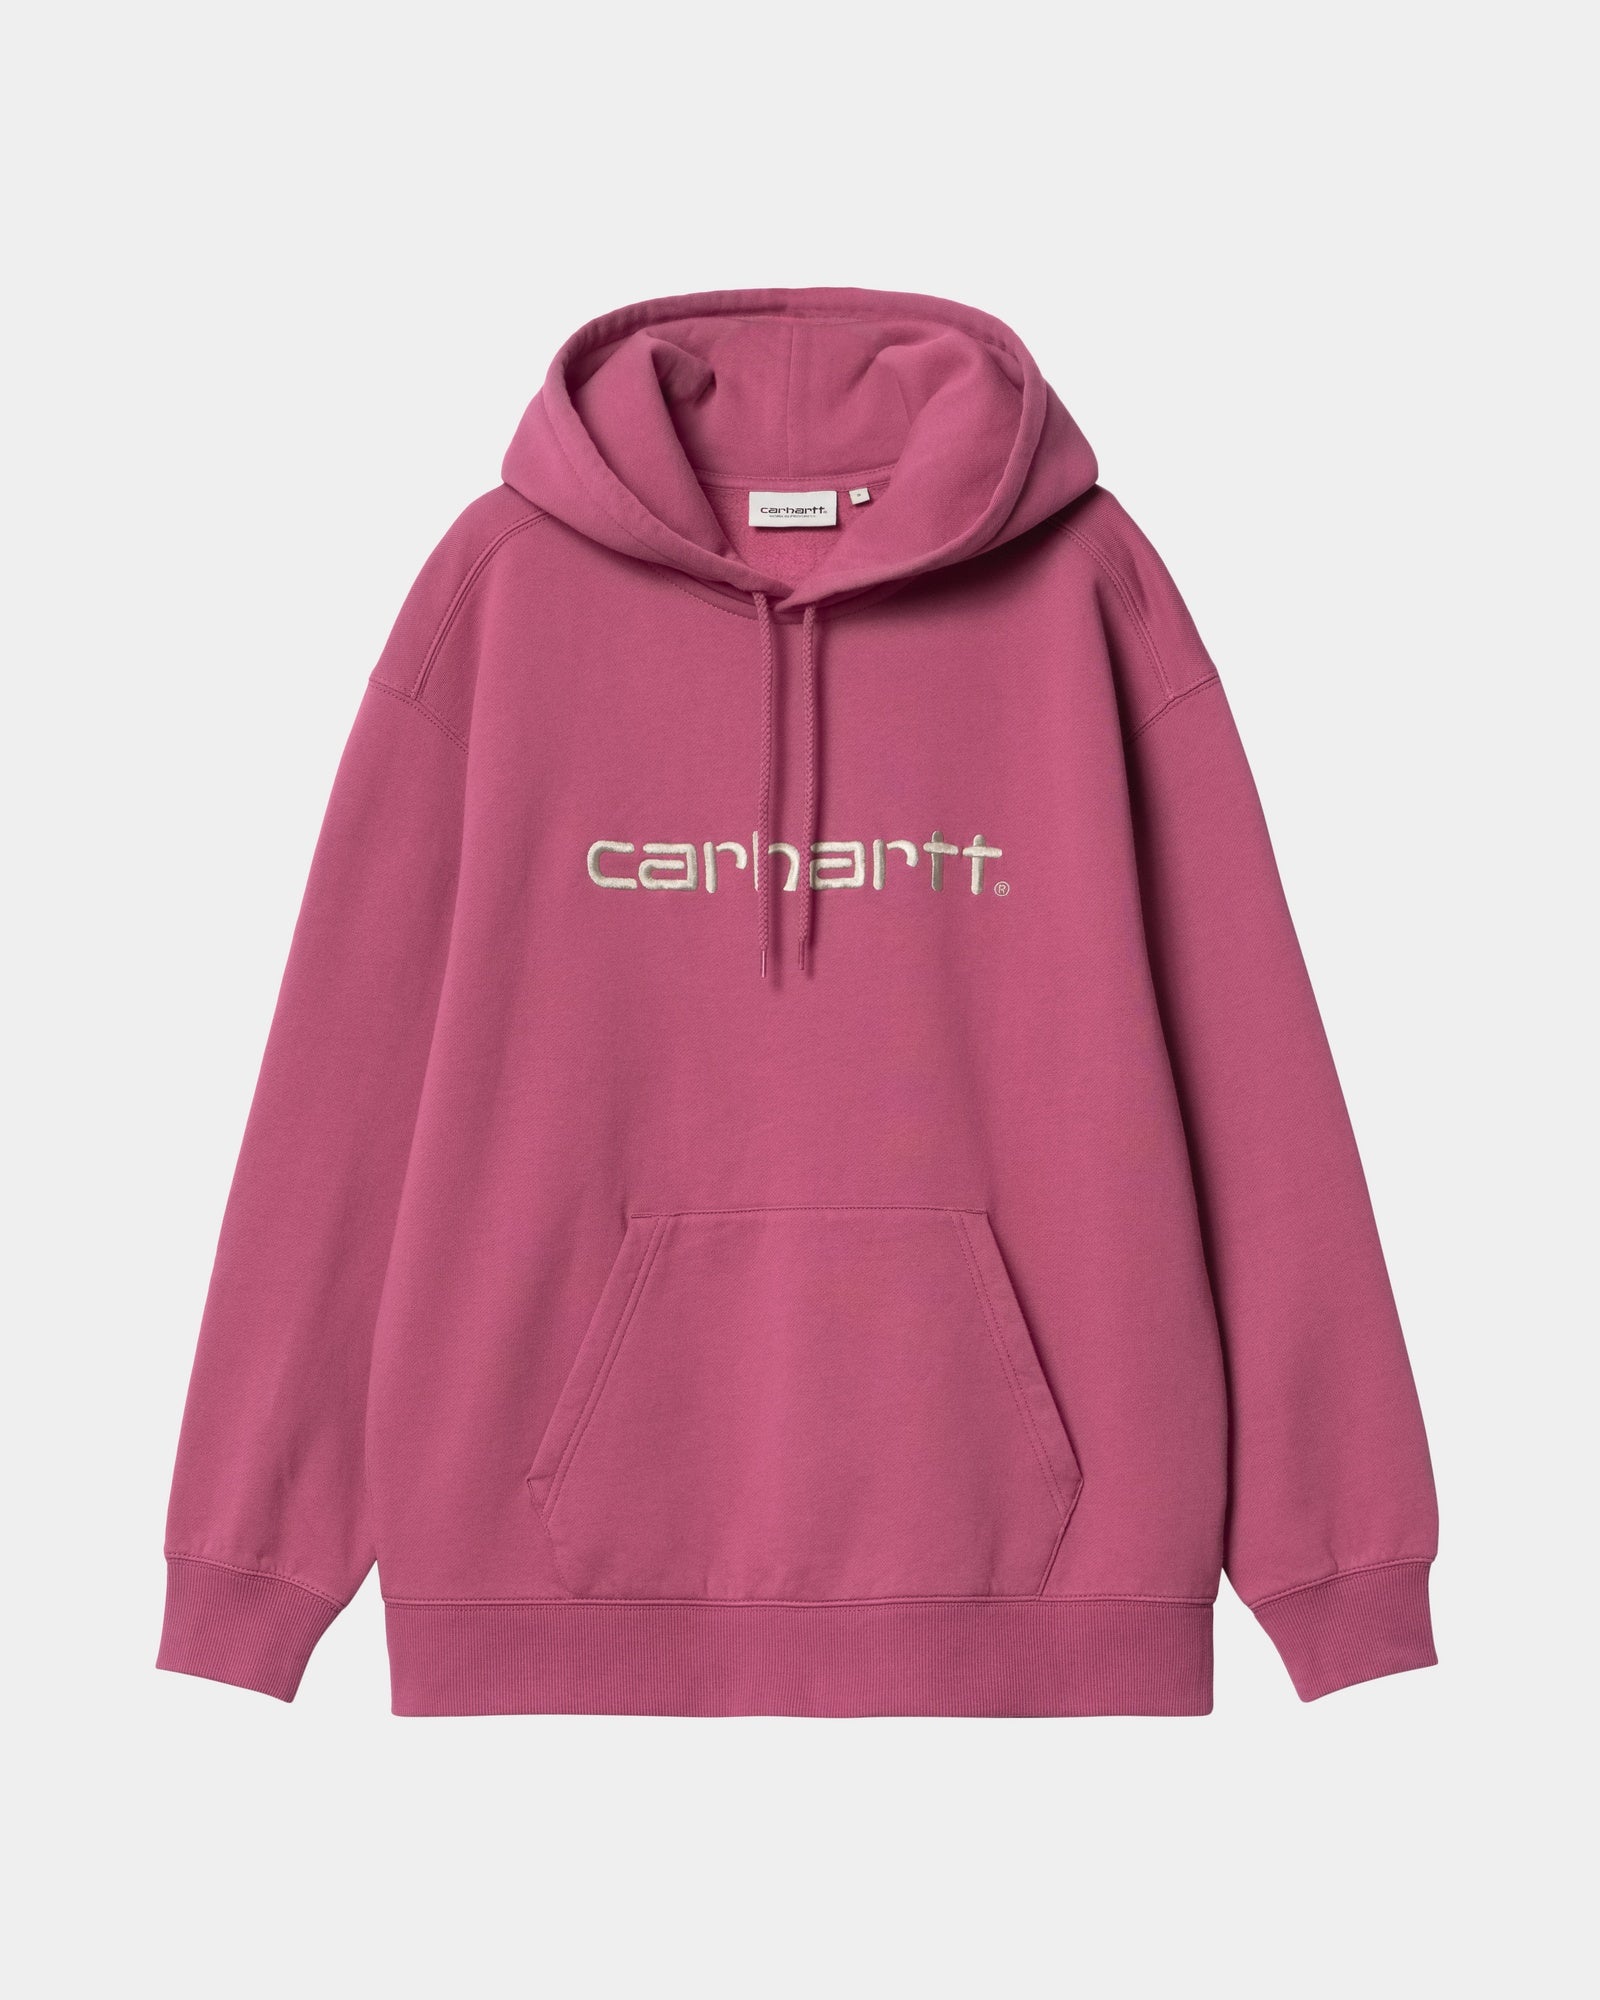 WOMEN'S Hooded 칼하트WIP Carhartt Sweatshirt,Magenta / Tonic